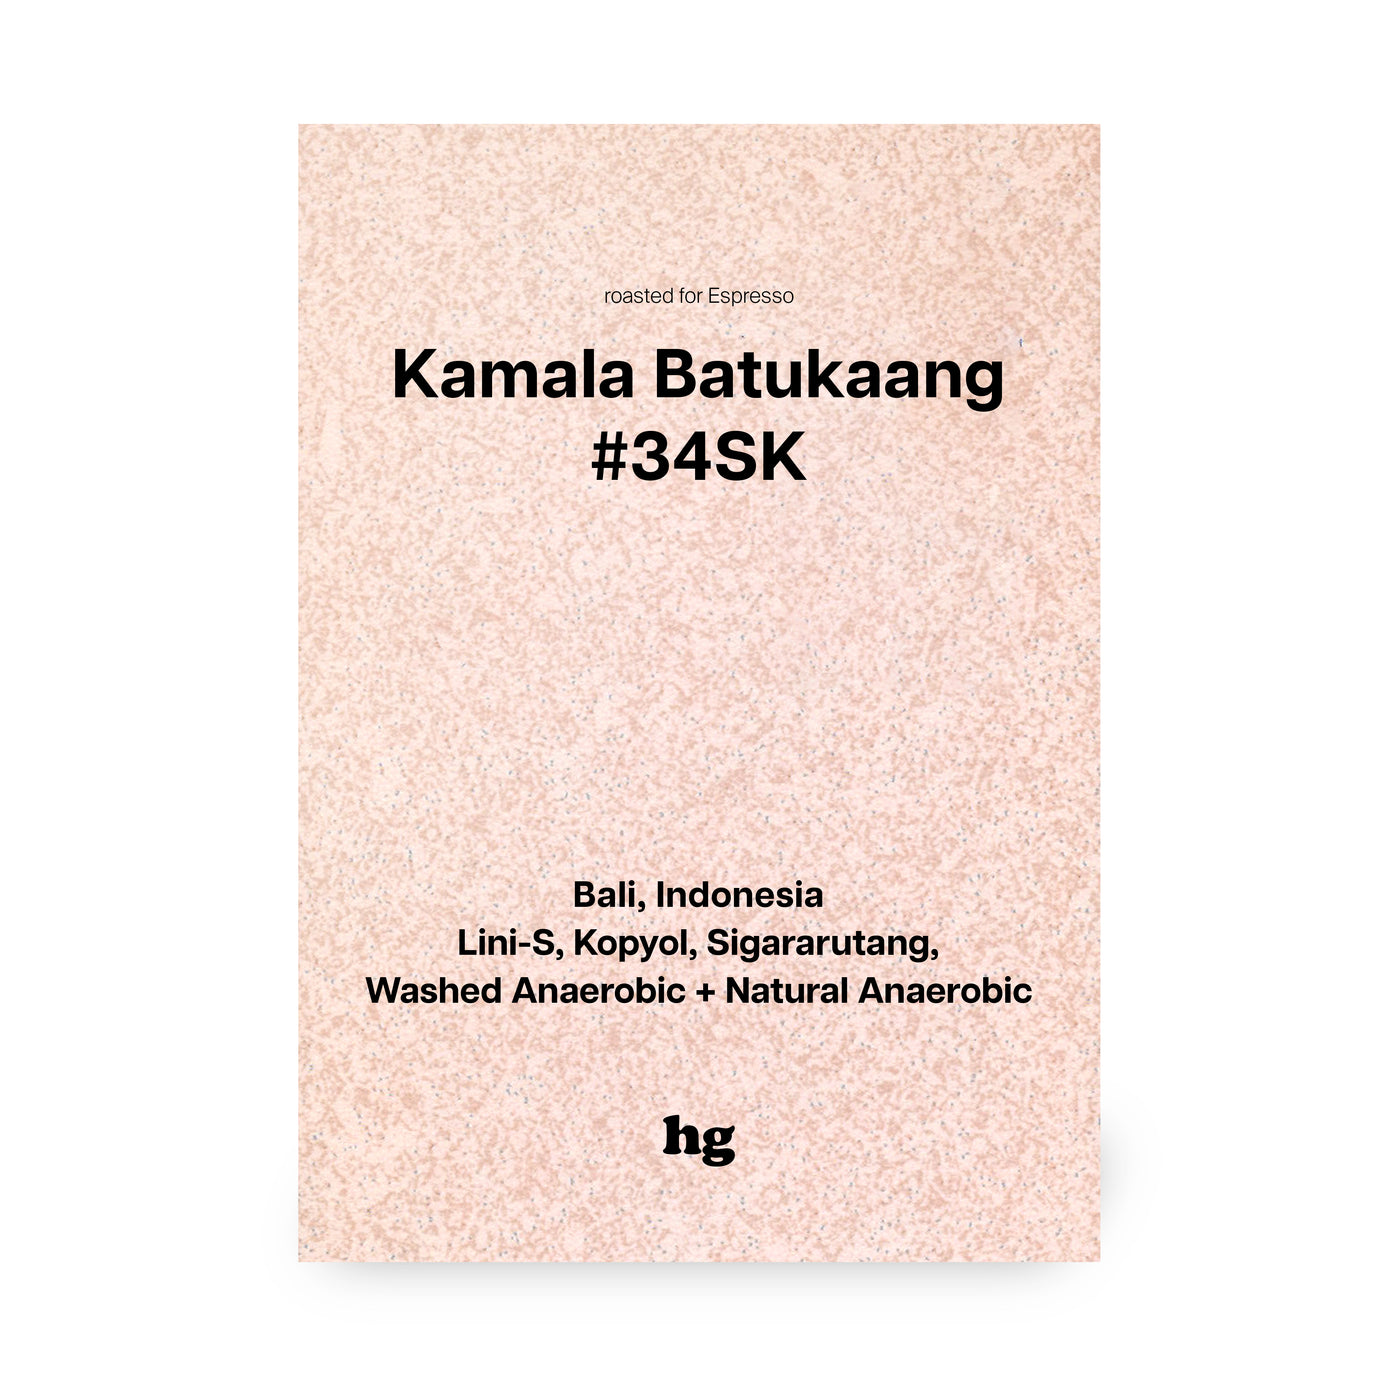 Kamala Batukaang #34SK, Bali, Indonesia